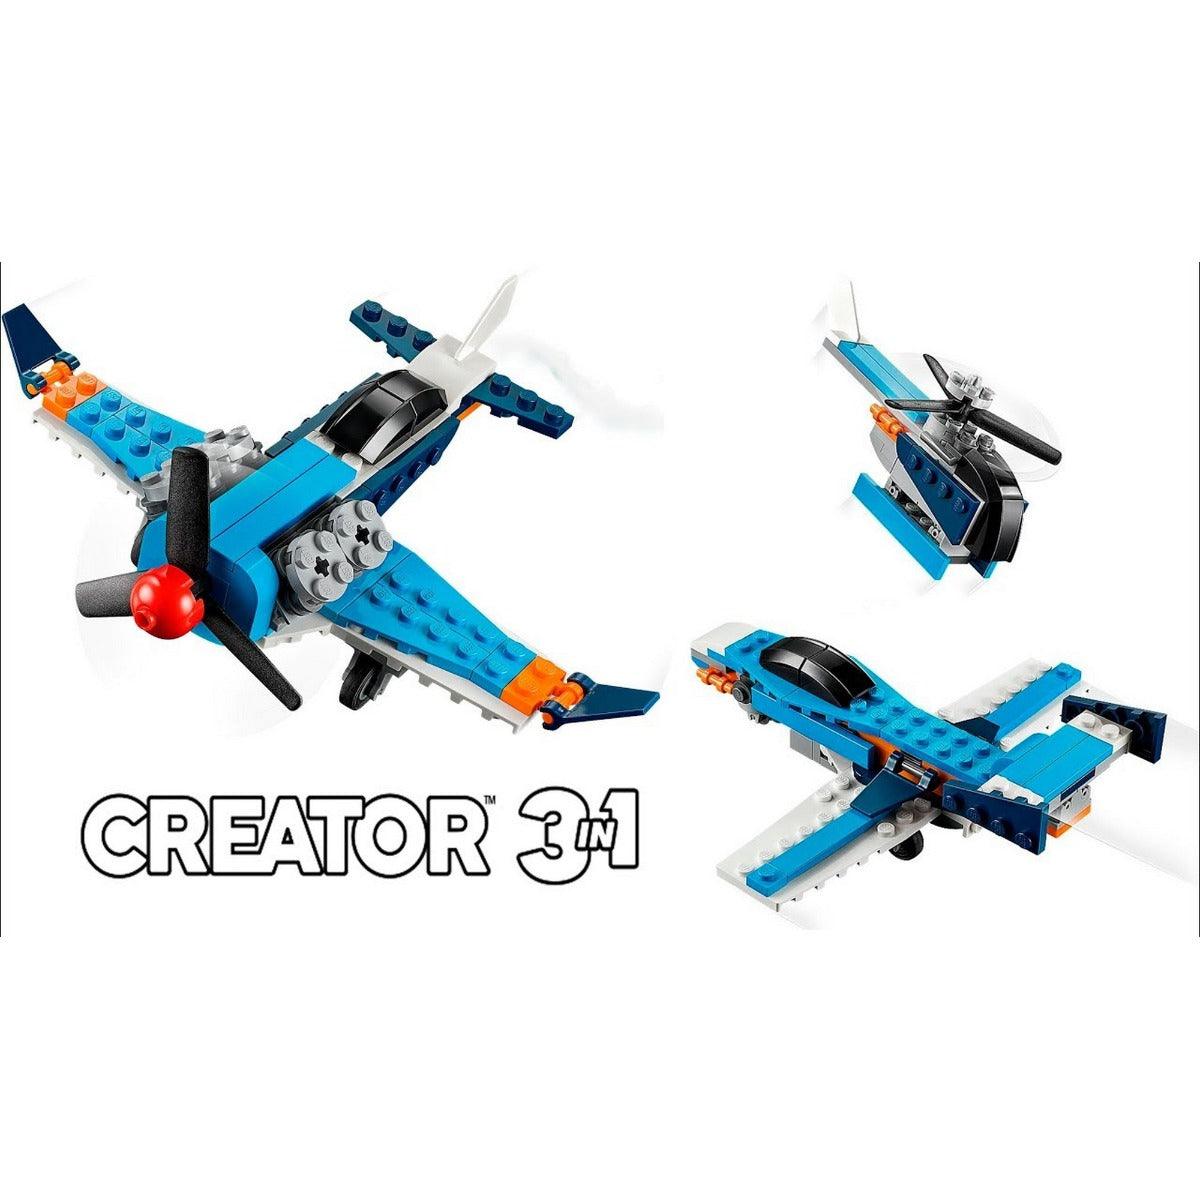 LEGO Creator Propeller Plane